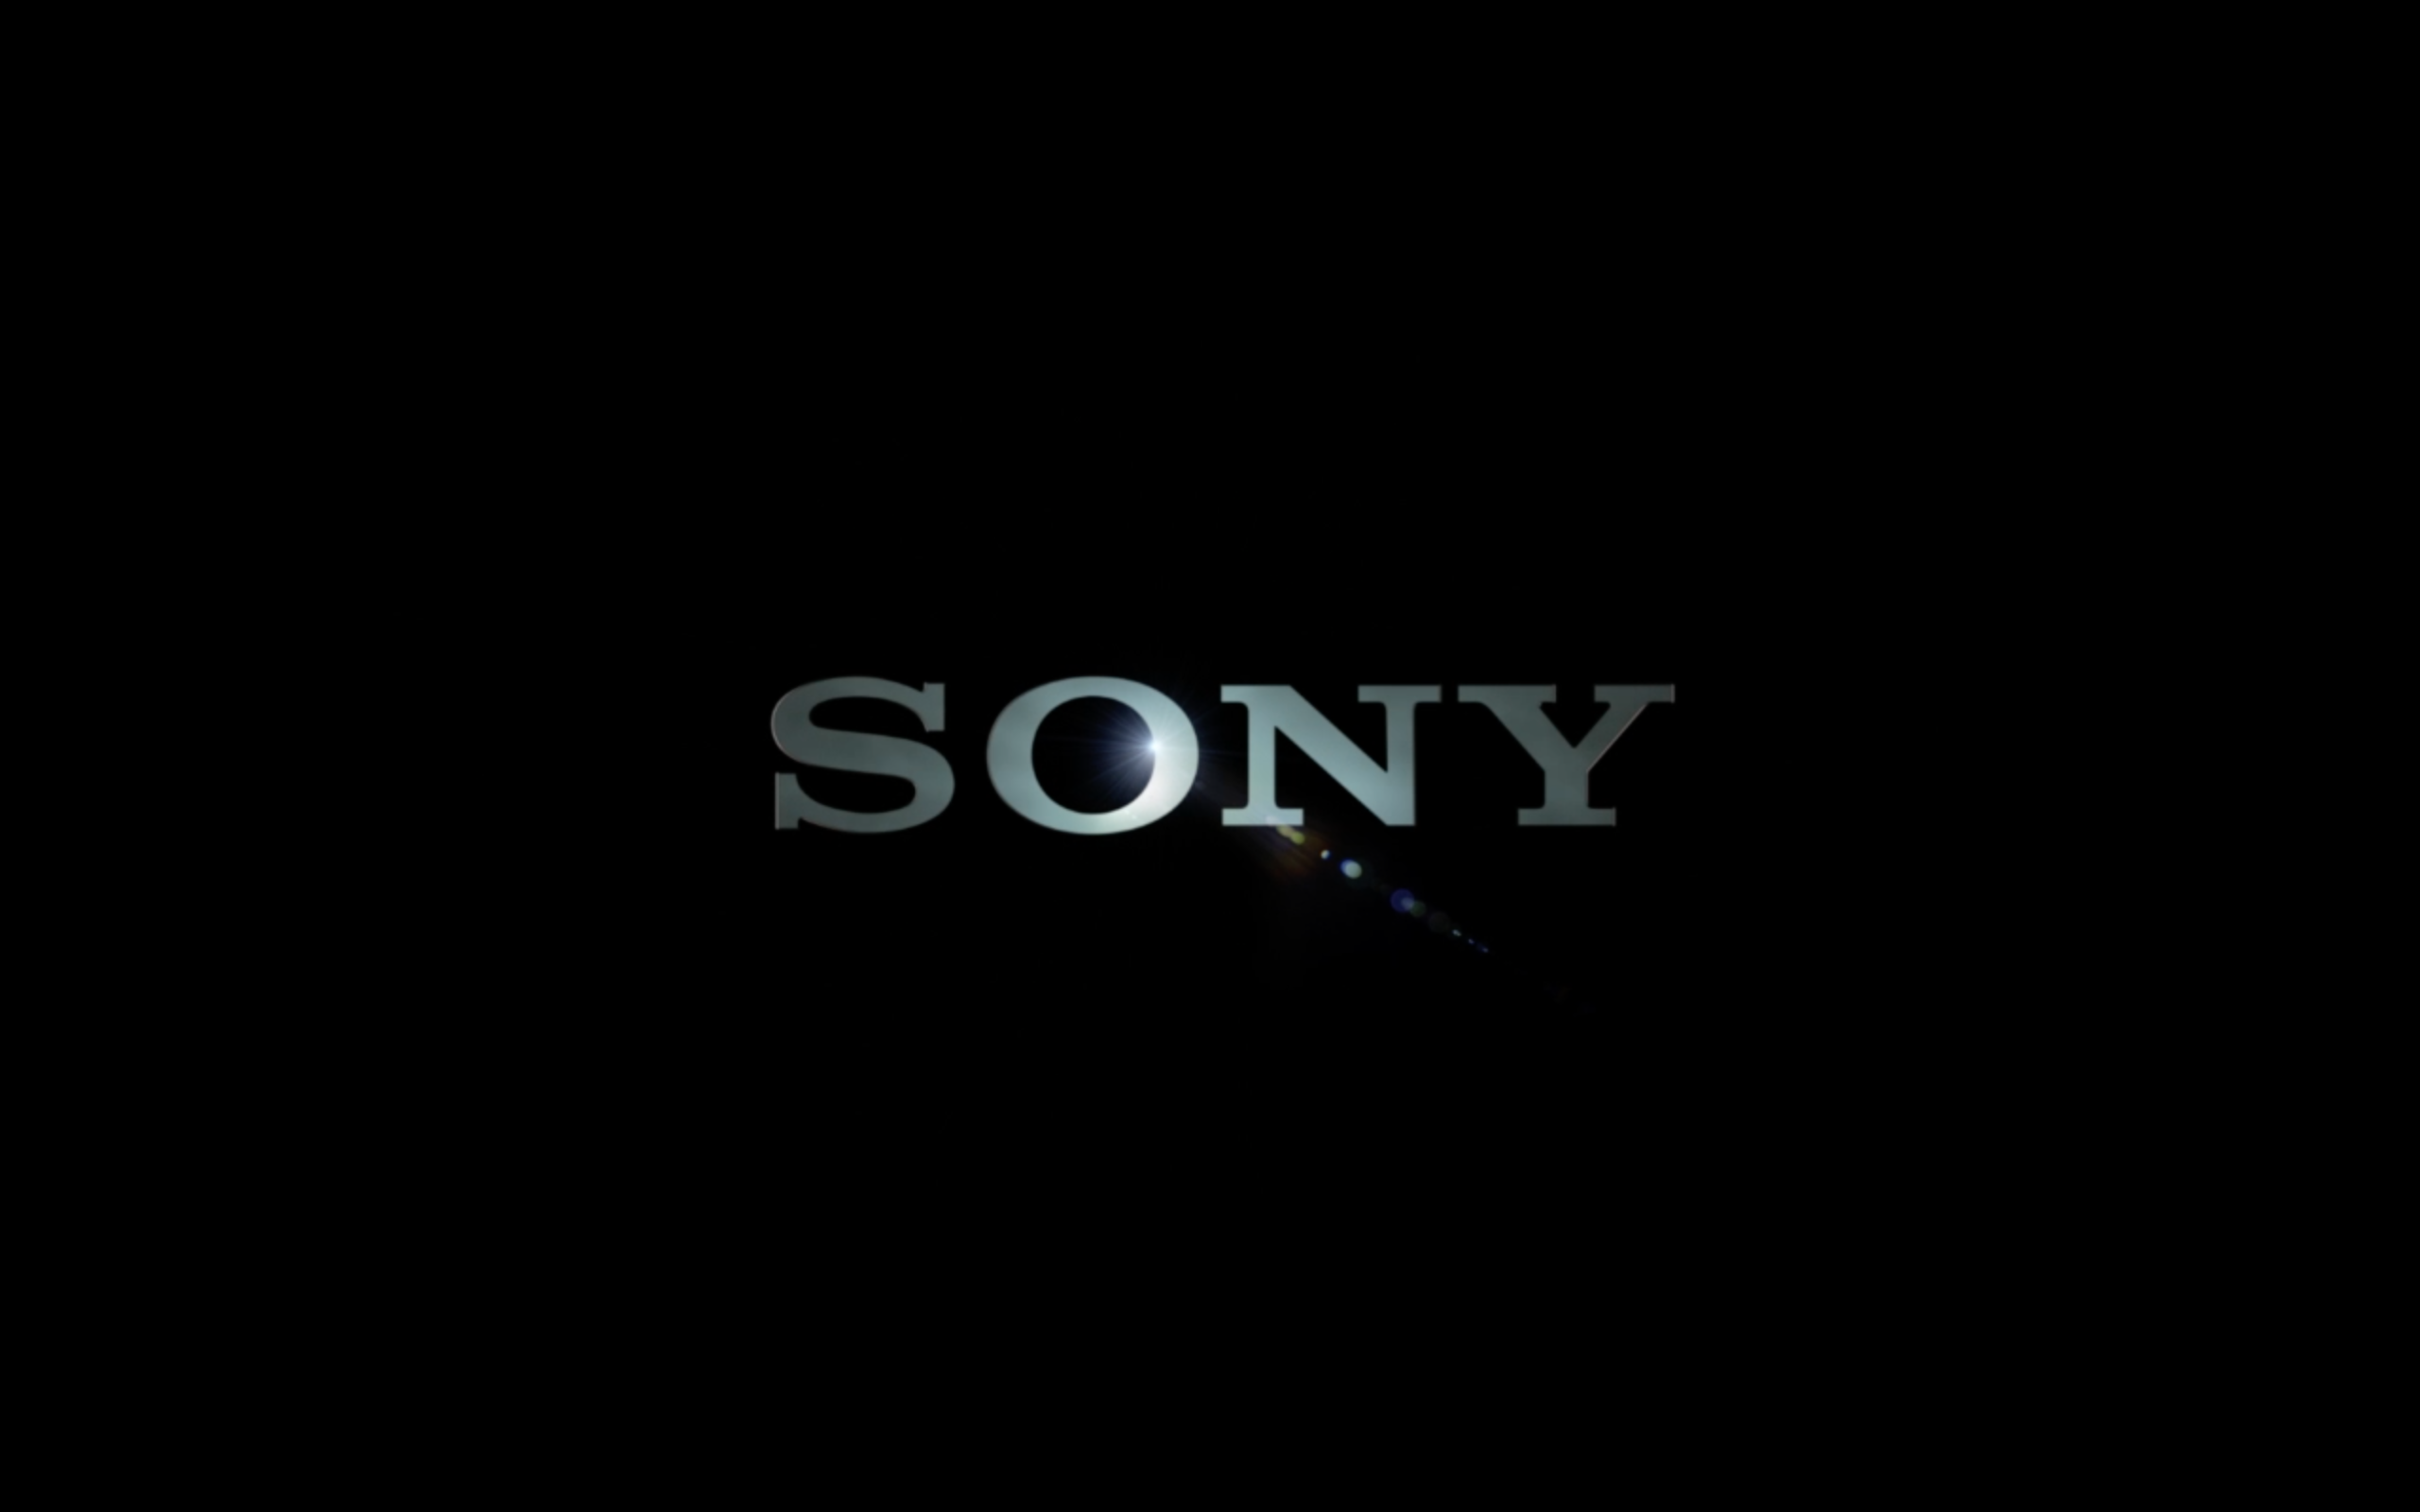 Sony true. Sony эмблема. Сони компания логотип. Sony картинки. Картинки с логотипом Sony.